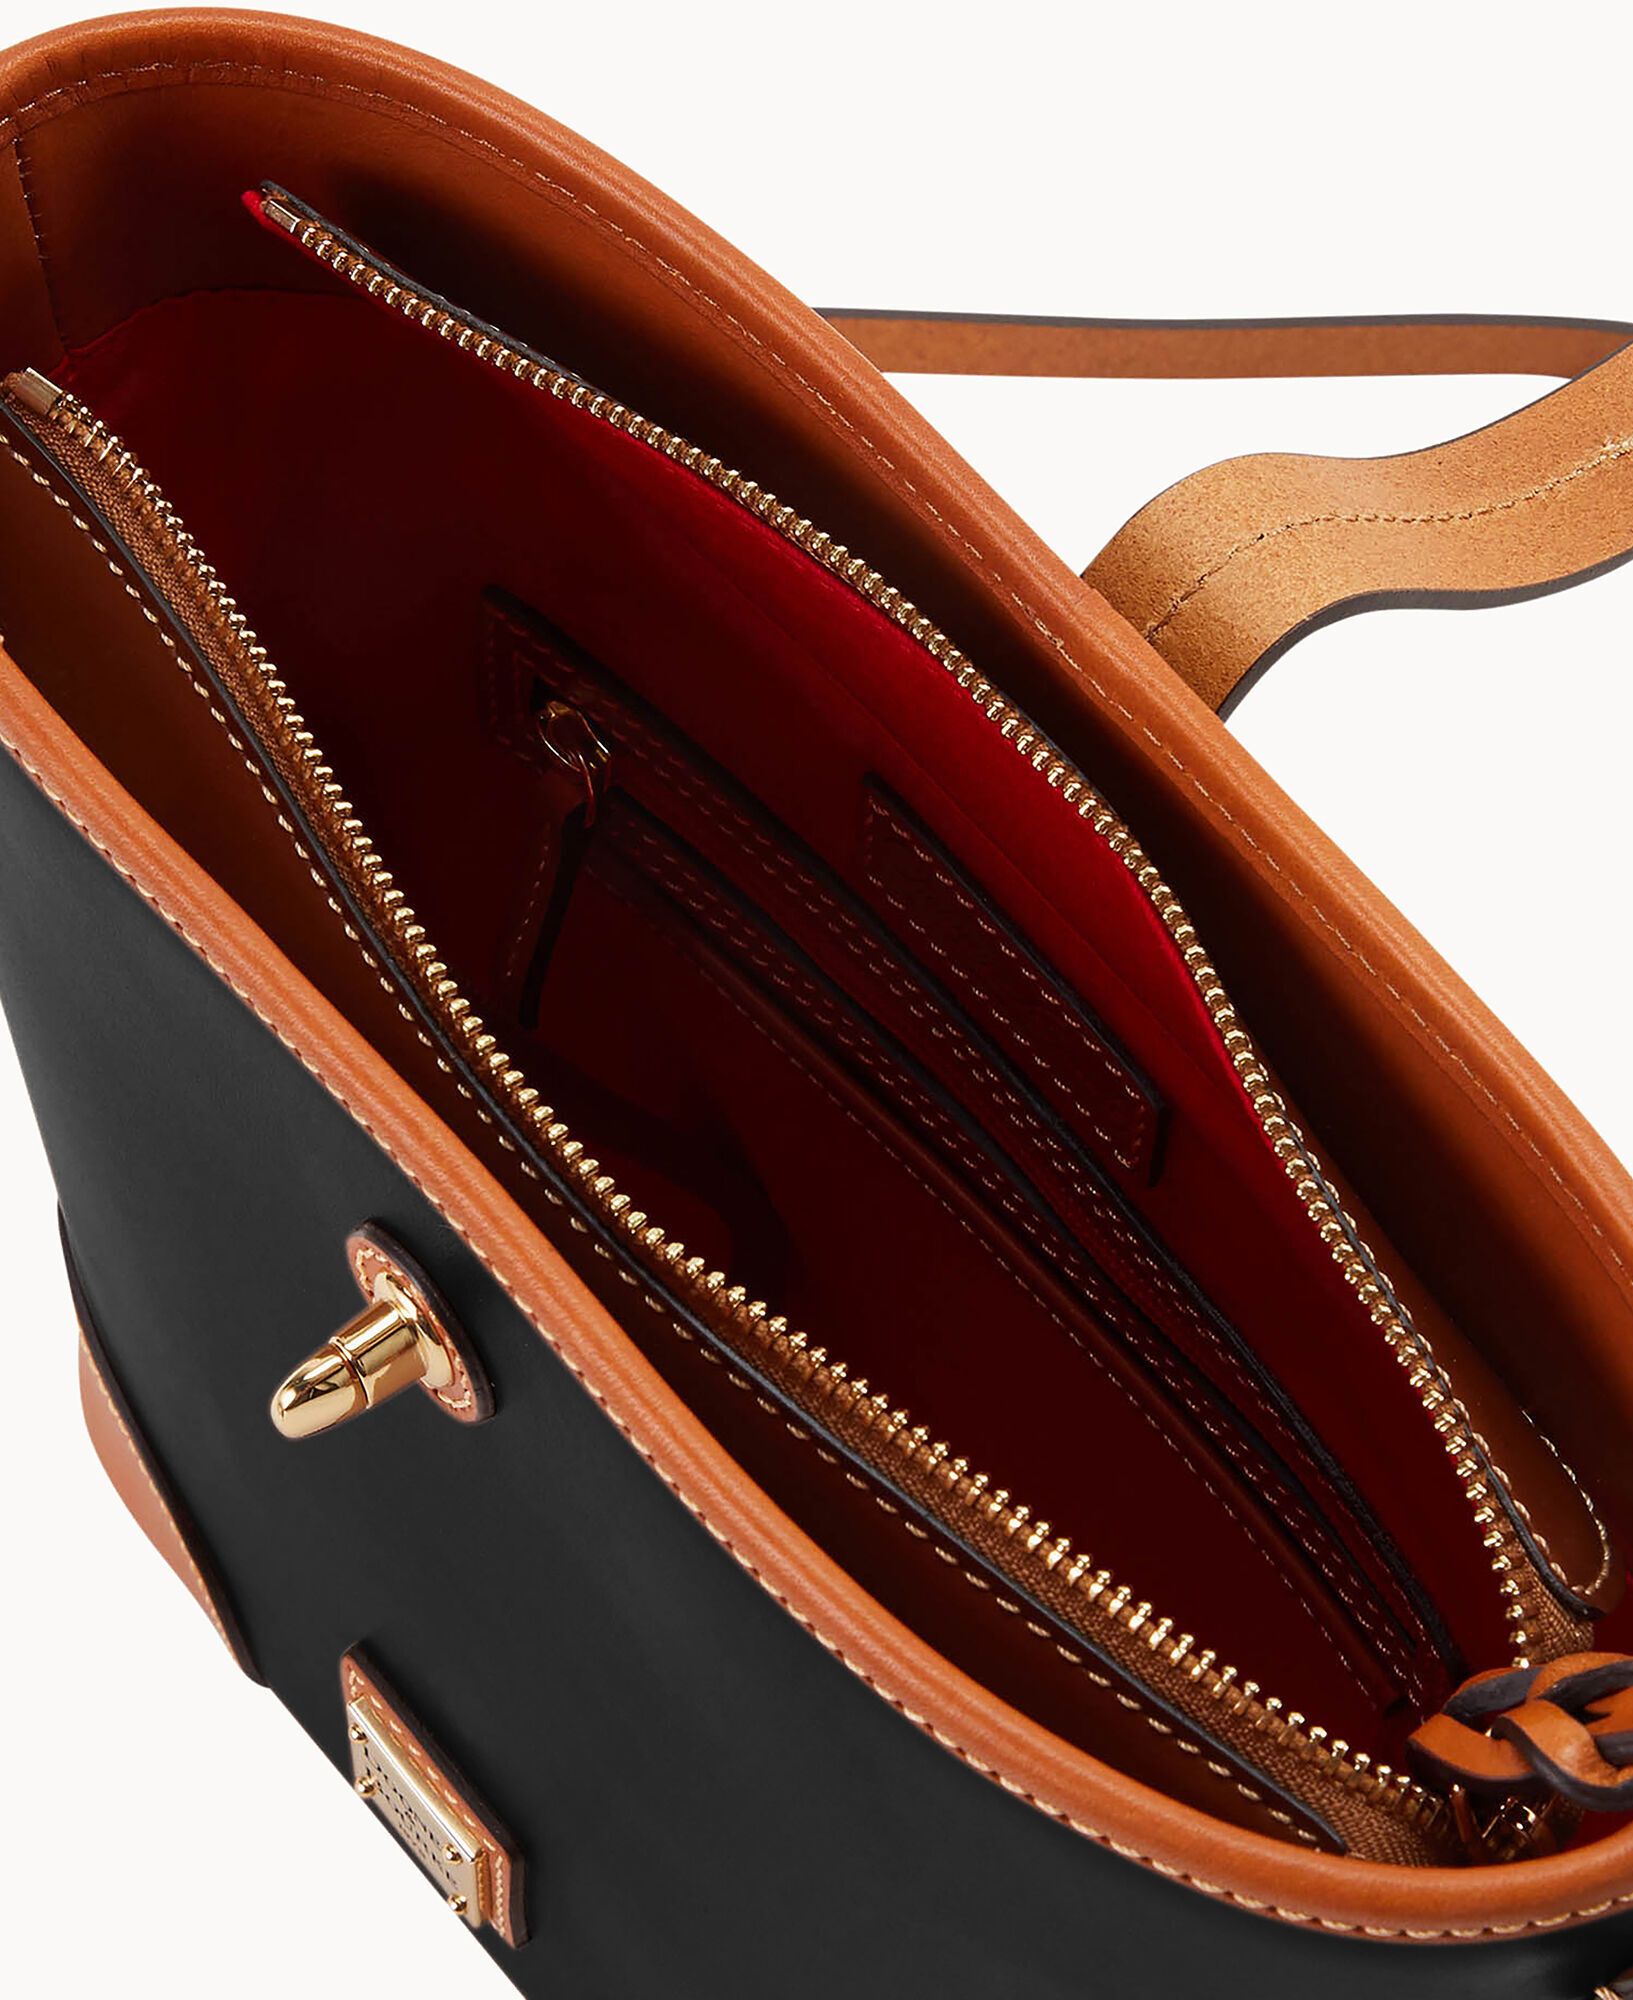 Dooney & Bourke Handbag, Wexford Leather Crossbody - Black: Handbags